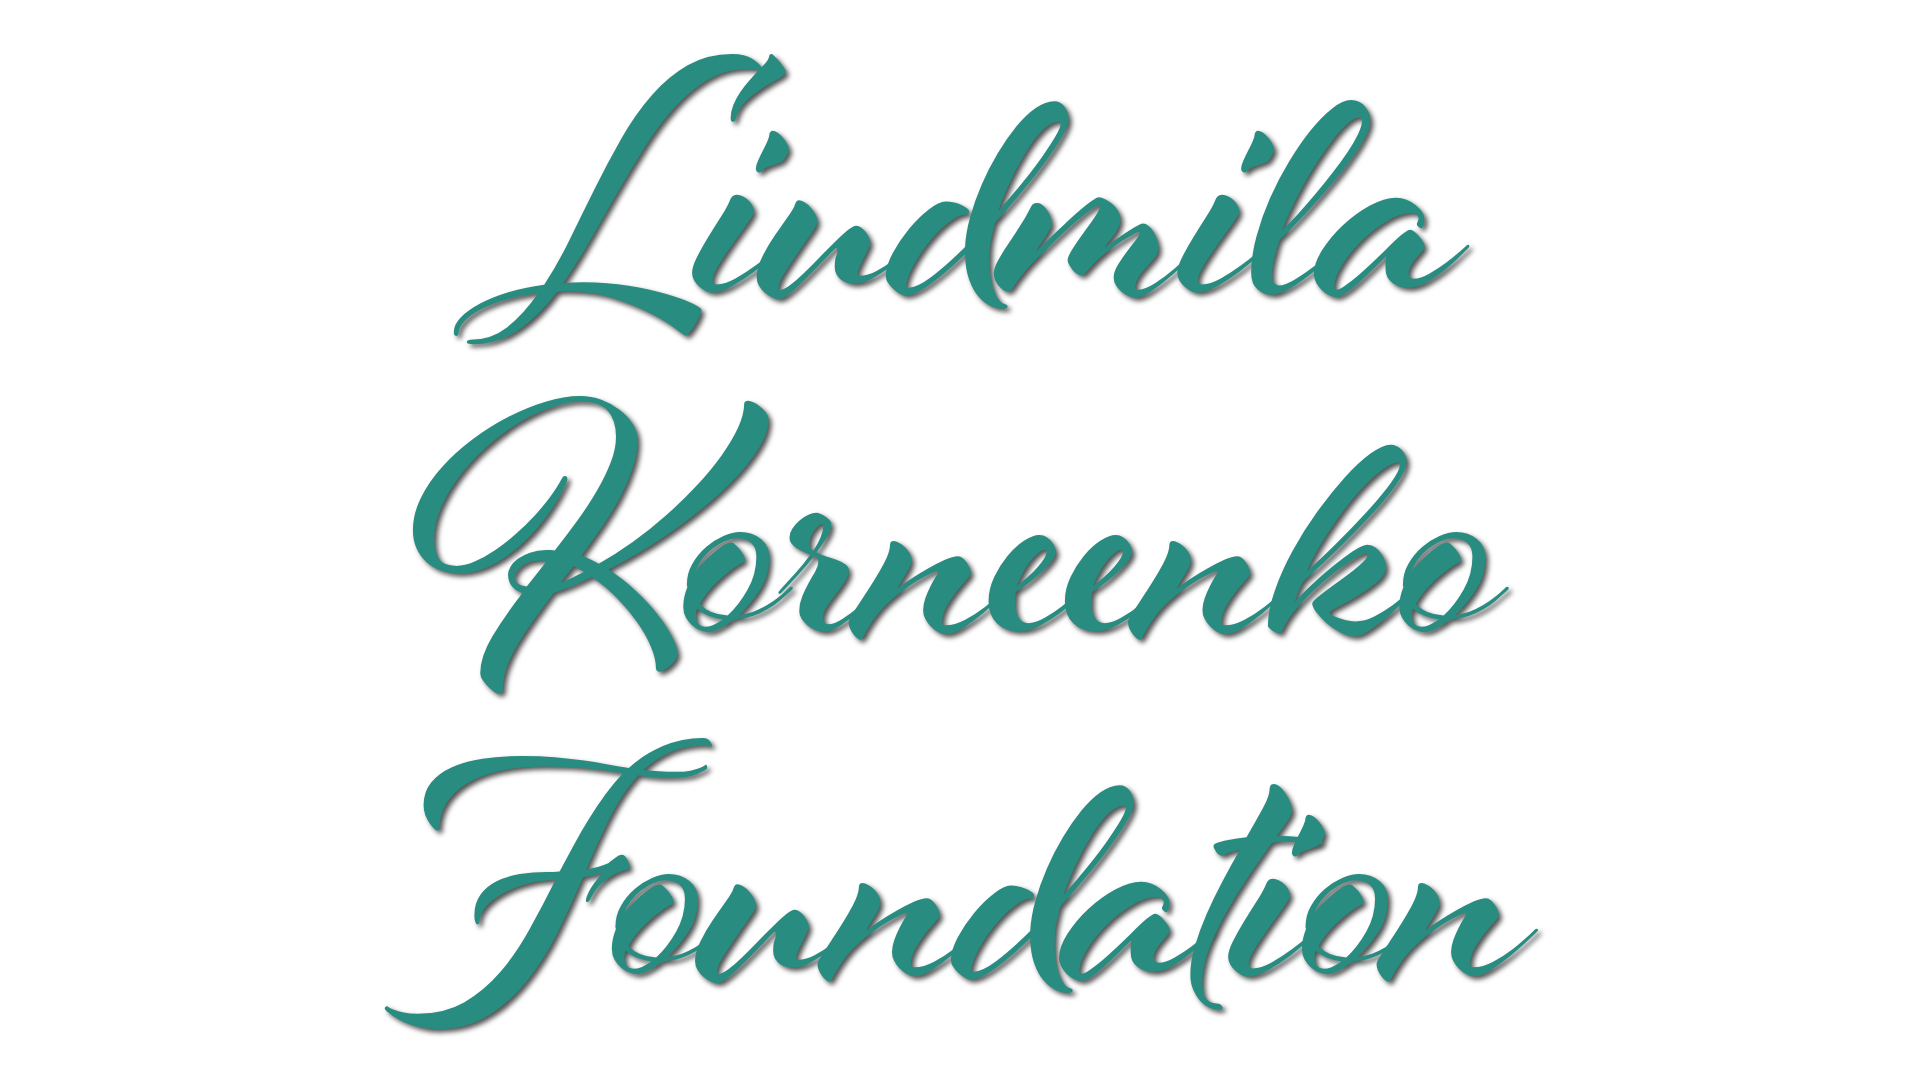 Light of Hope - Liudmila Korneenko Foundation